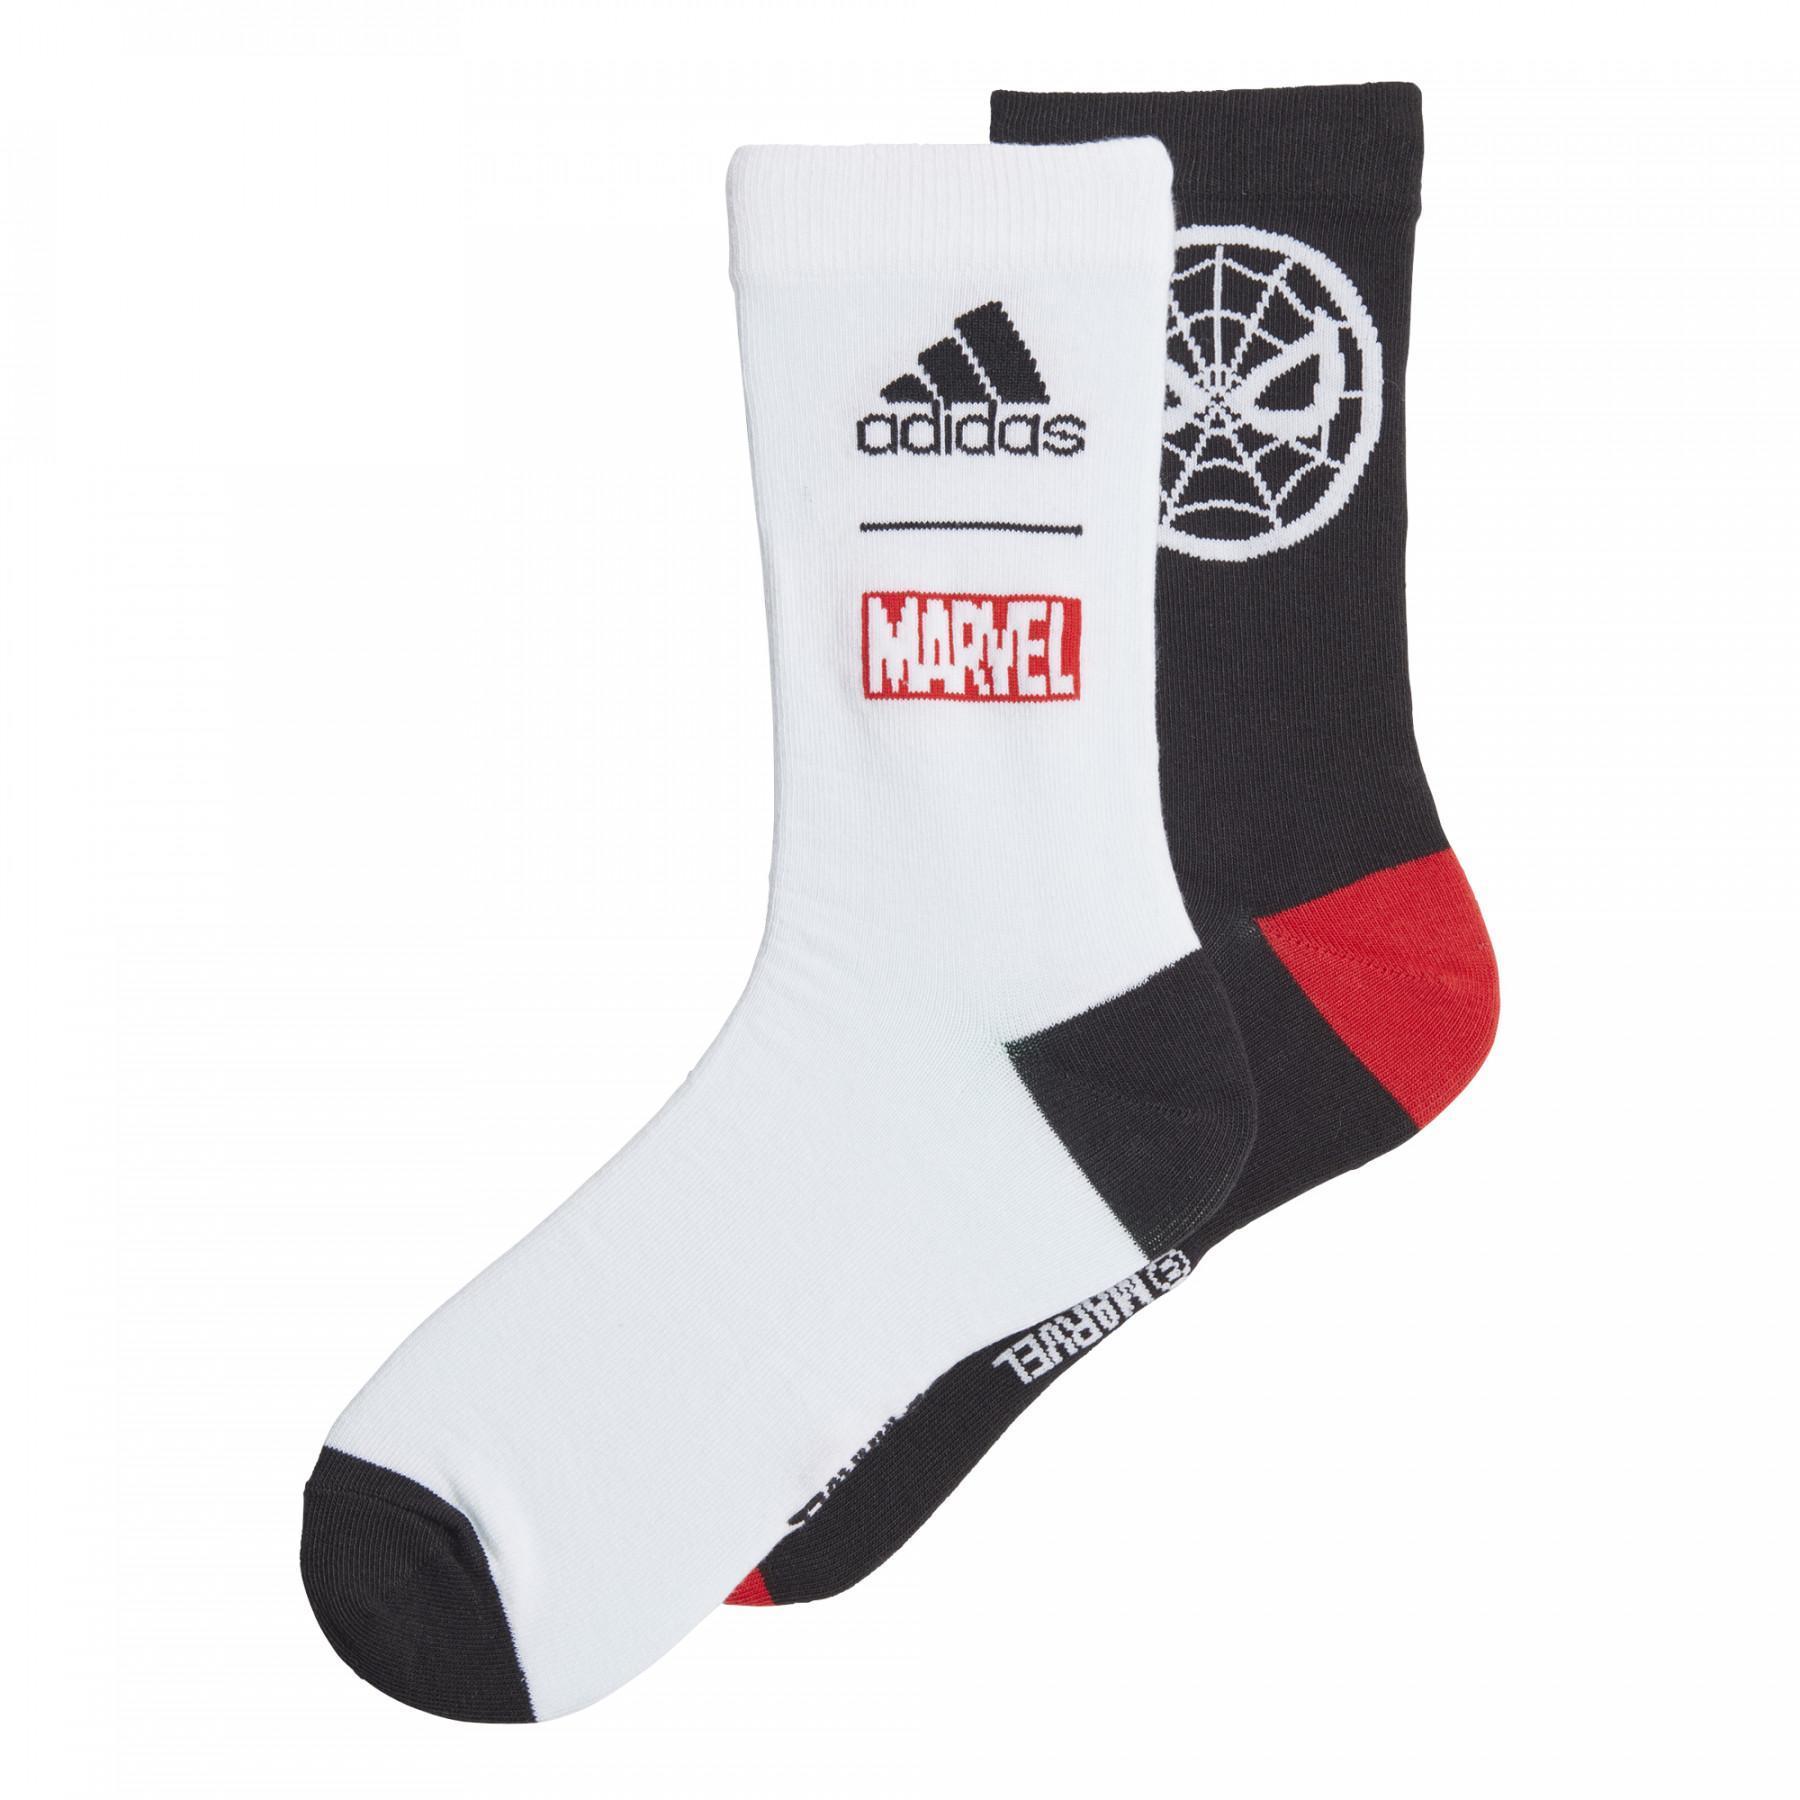 Children's socks adidas Marvel Spider-Man